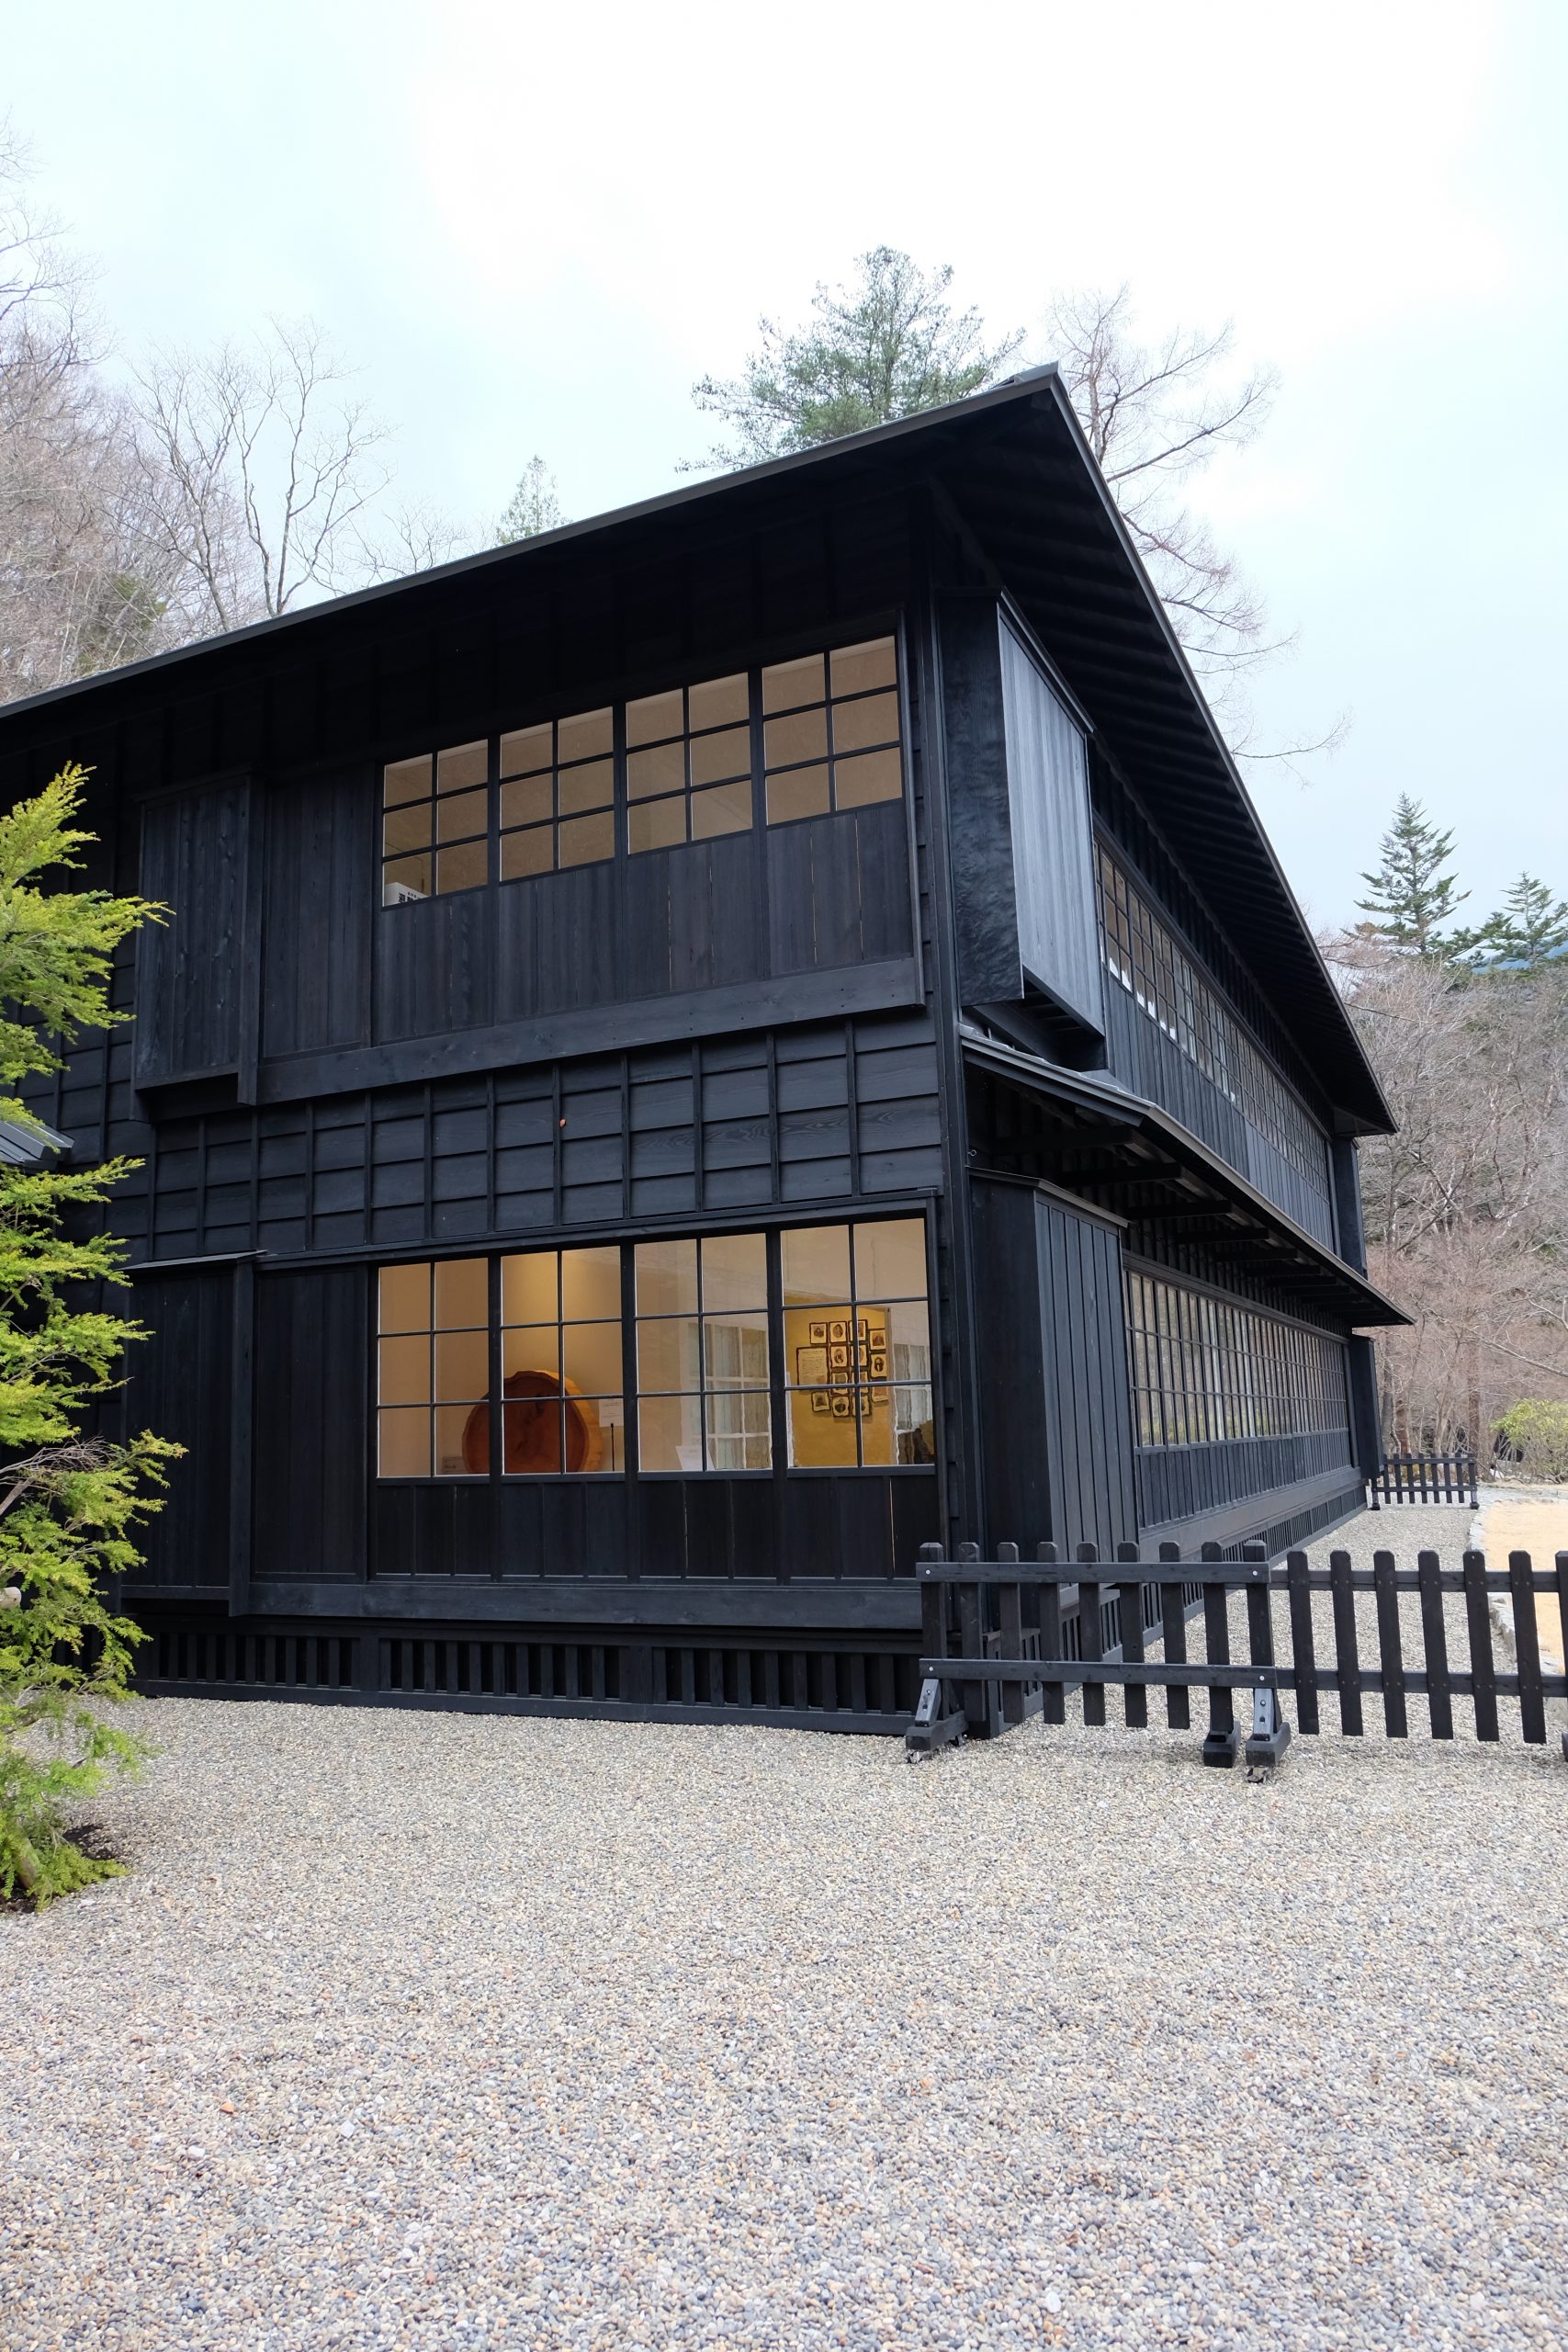 The stunning black exterior of the British embassy villa in Nikko